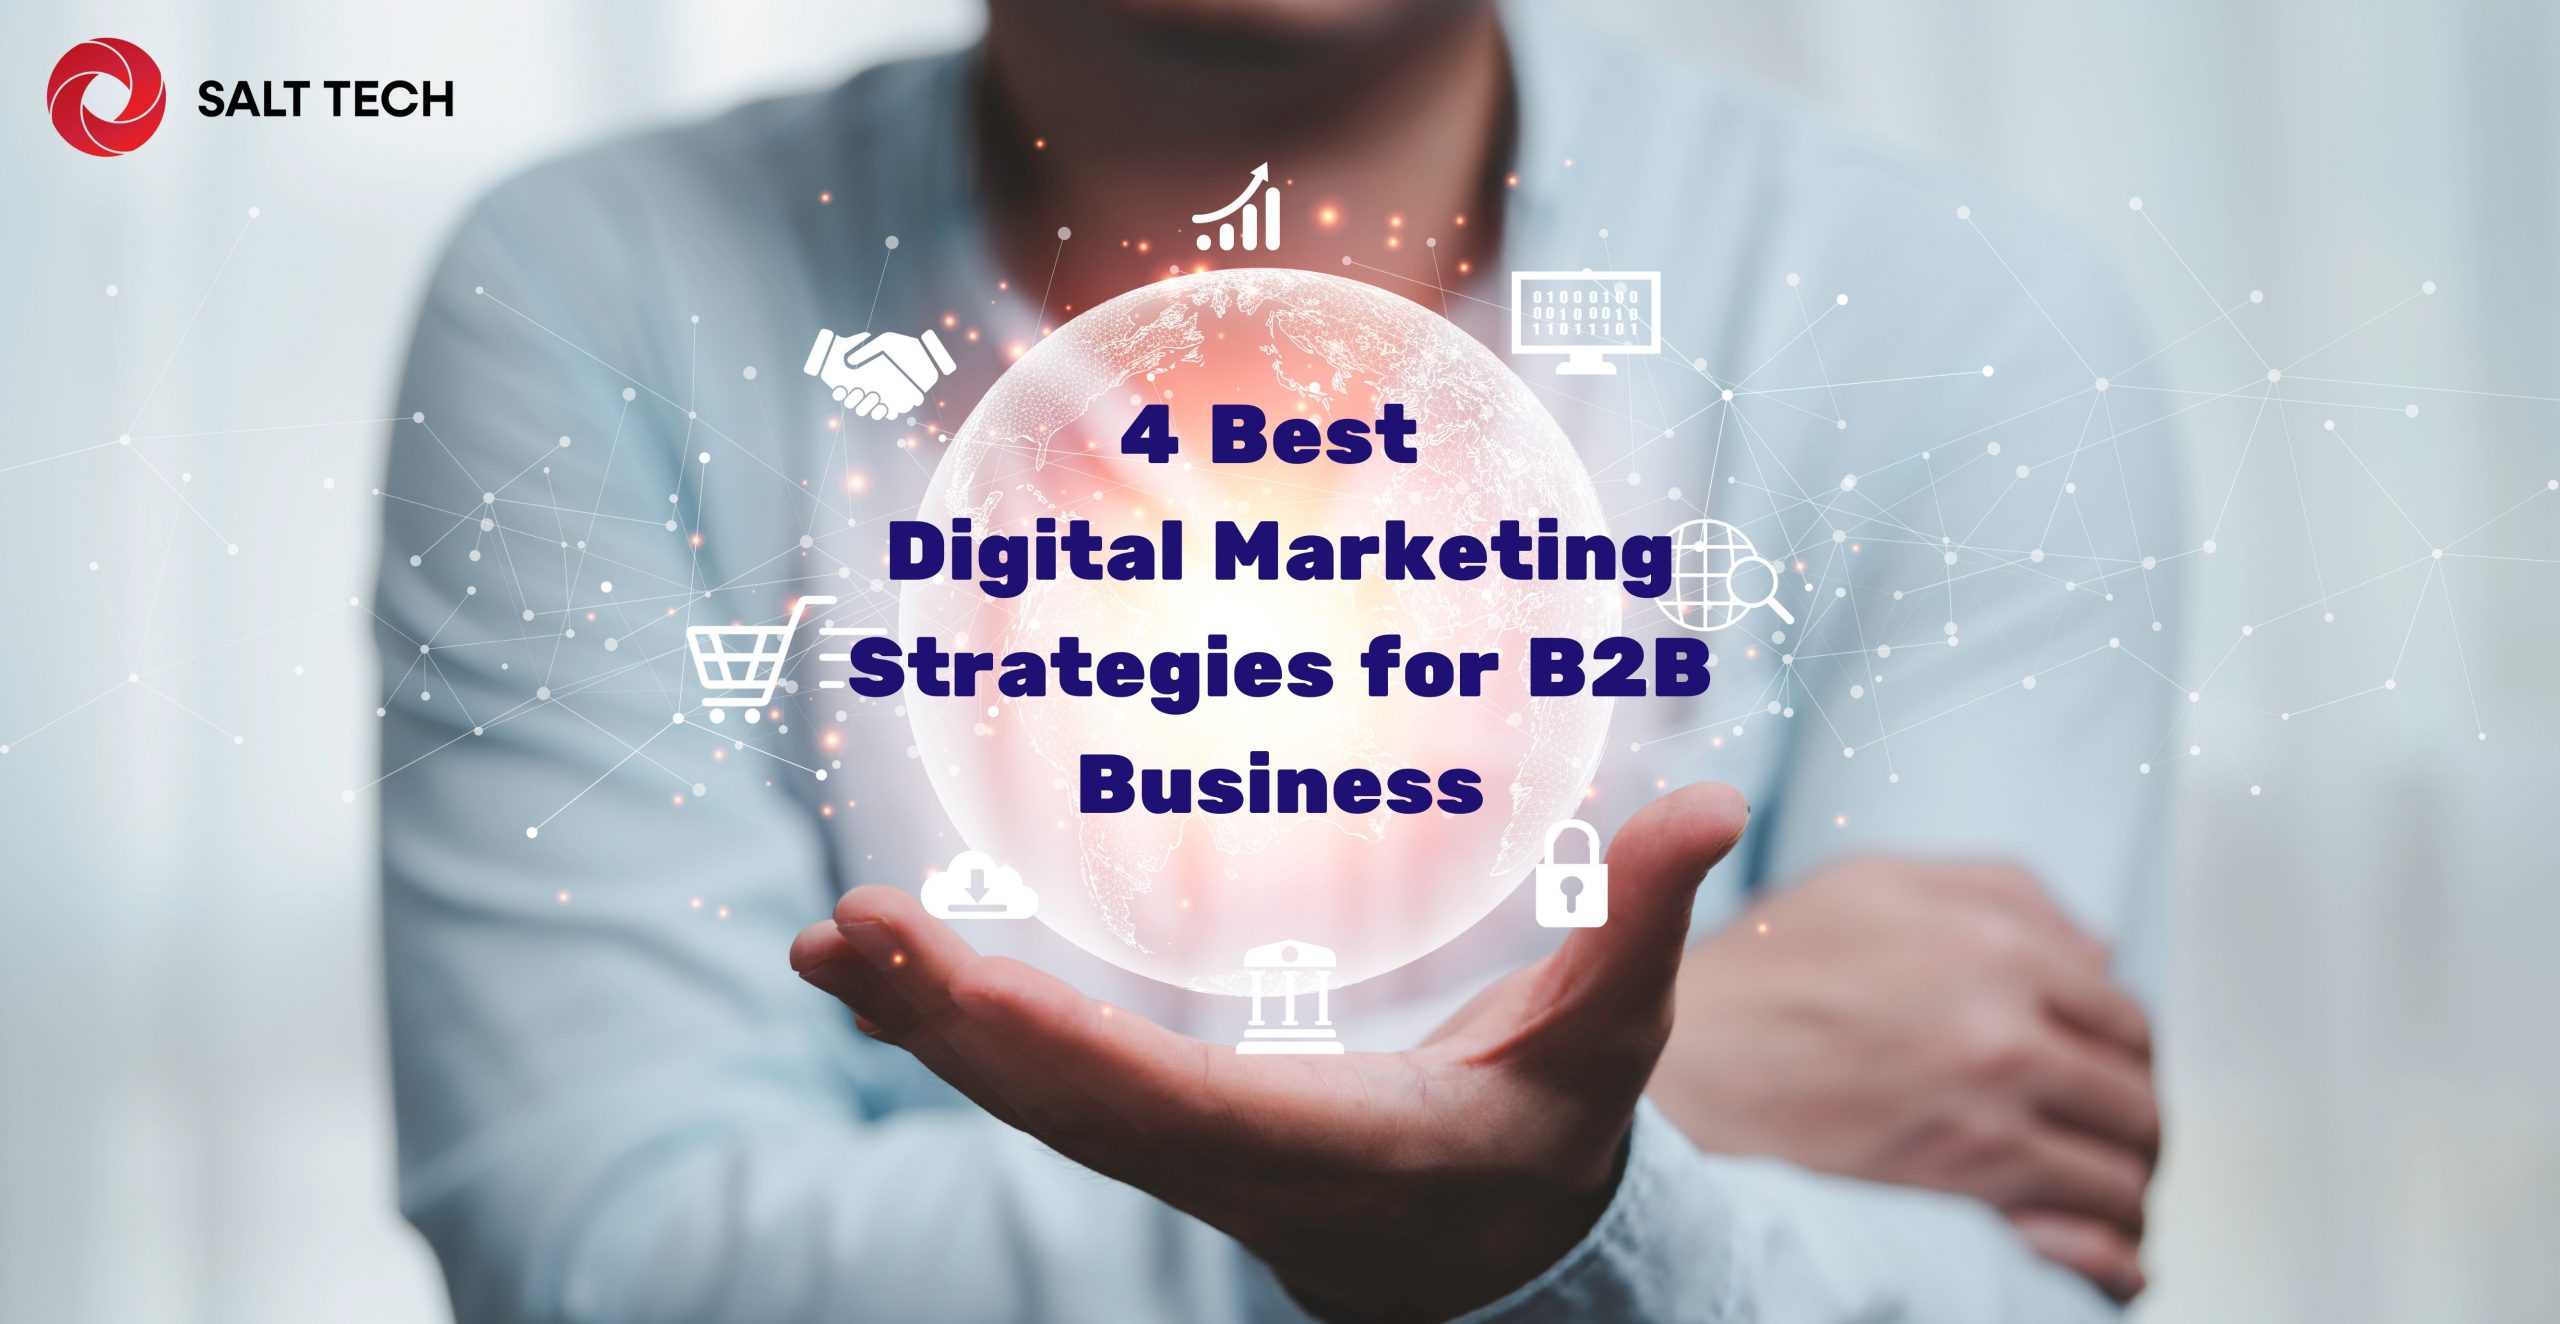 SALT TECH- 4 Best Digital Marketing Strategies for B2B Business